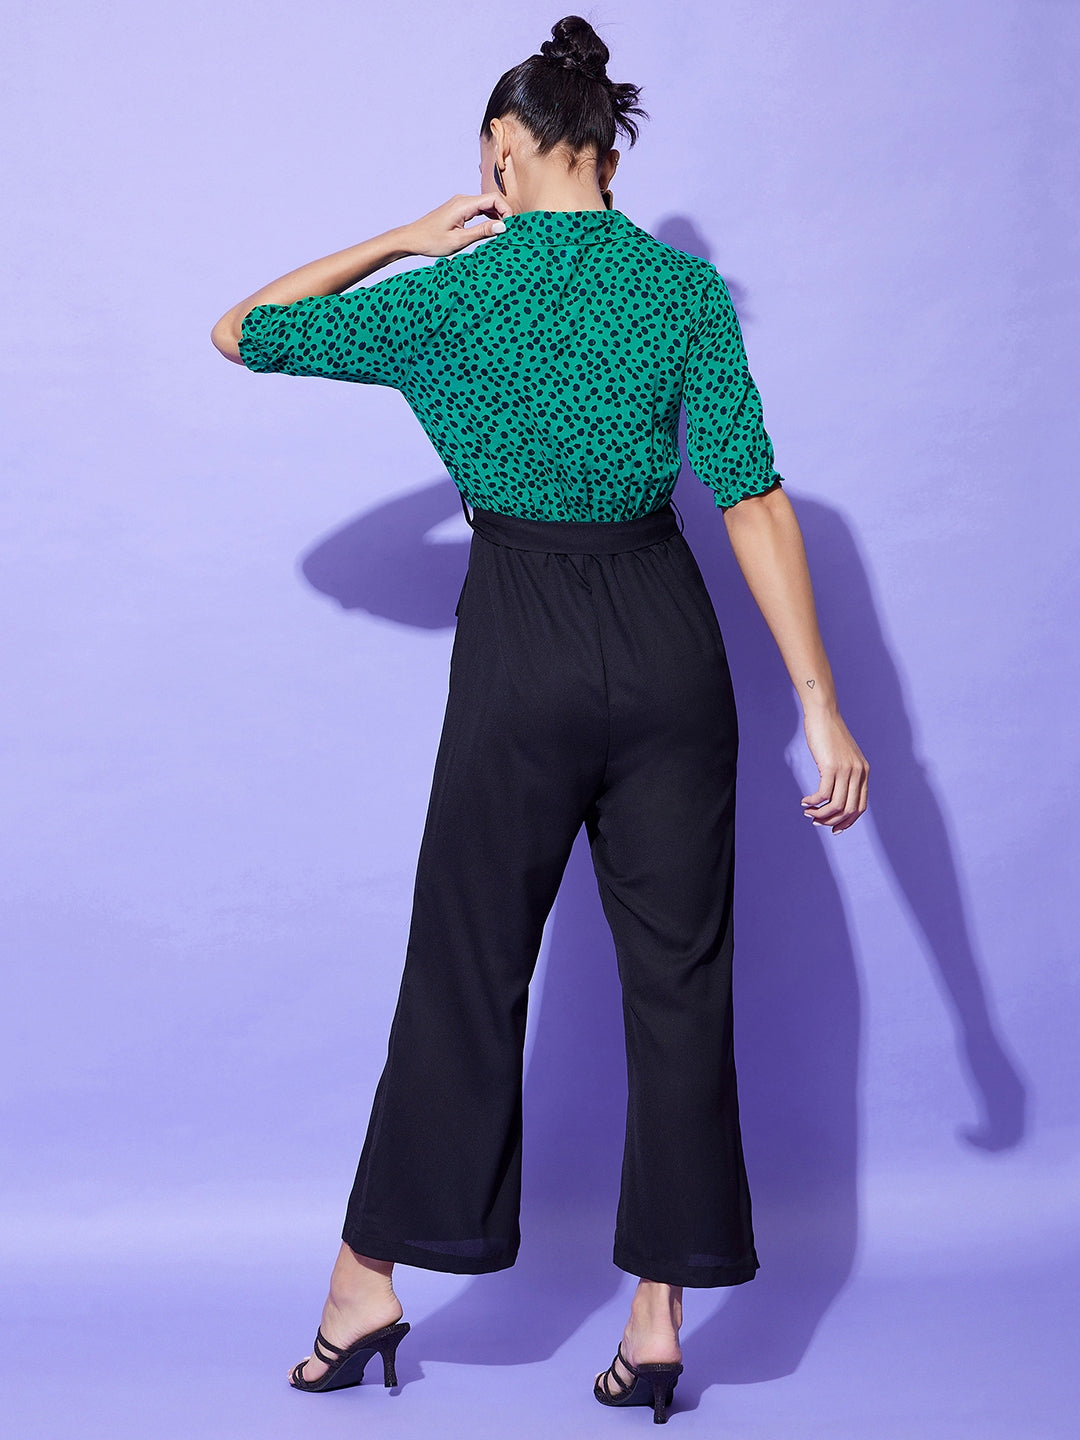 Women's Black And Green Polka Dot Jumpsuit - StyleStone